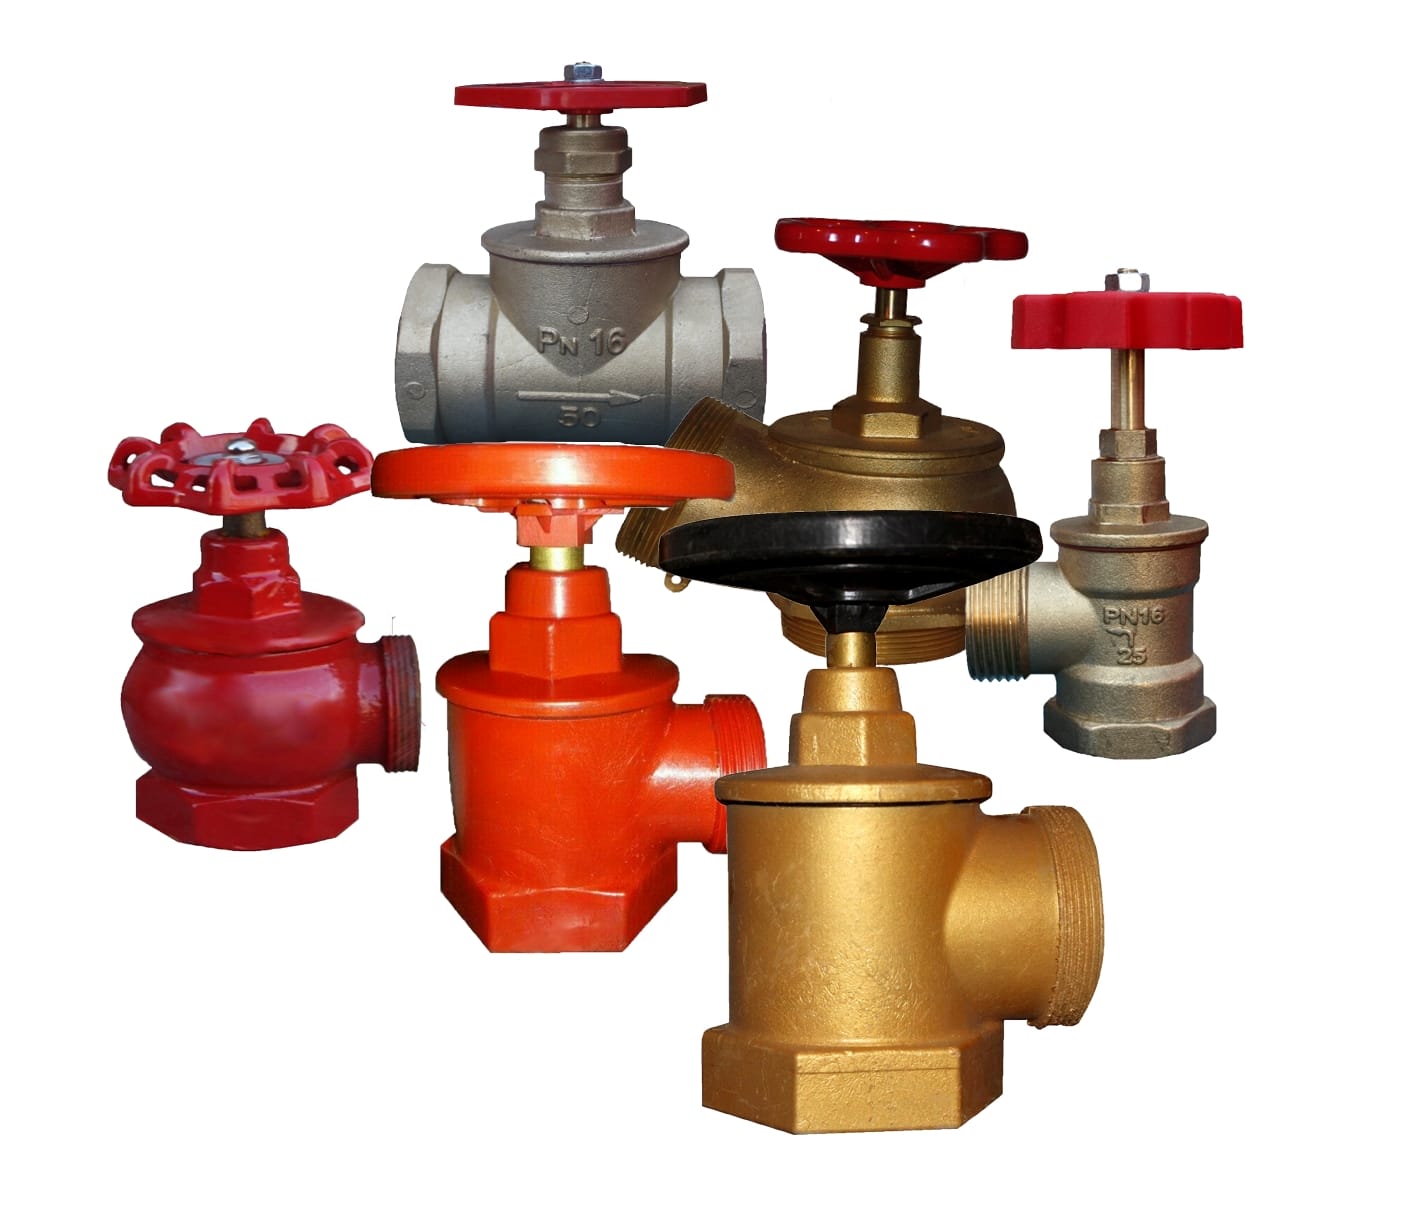 Fire valves